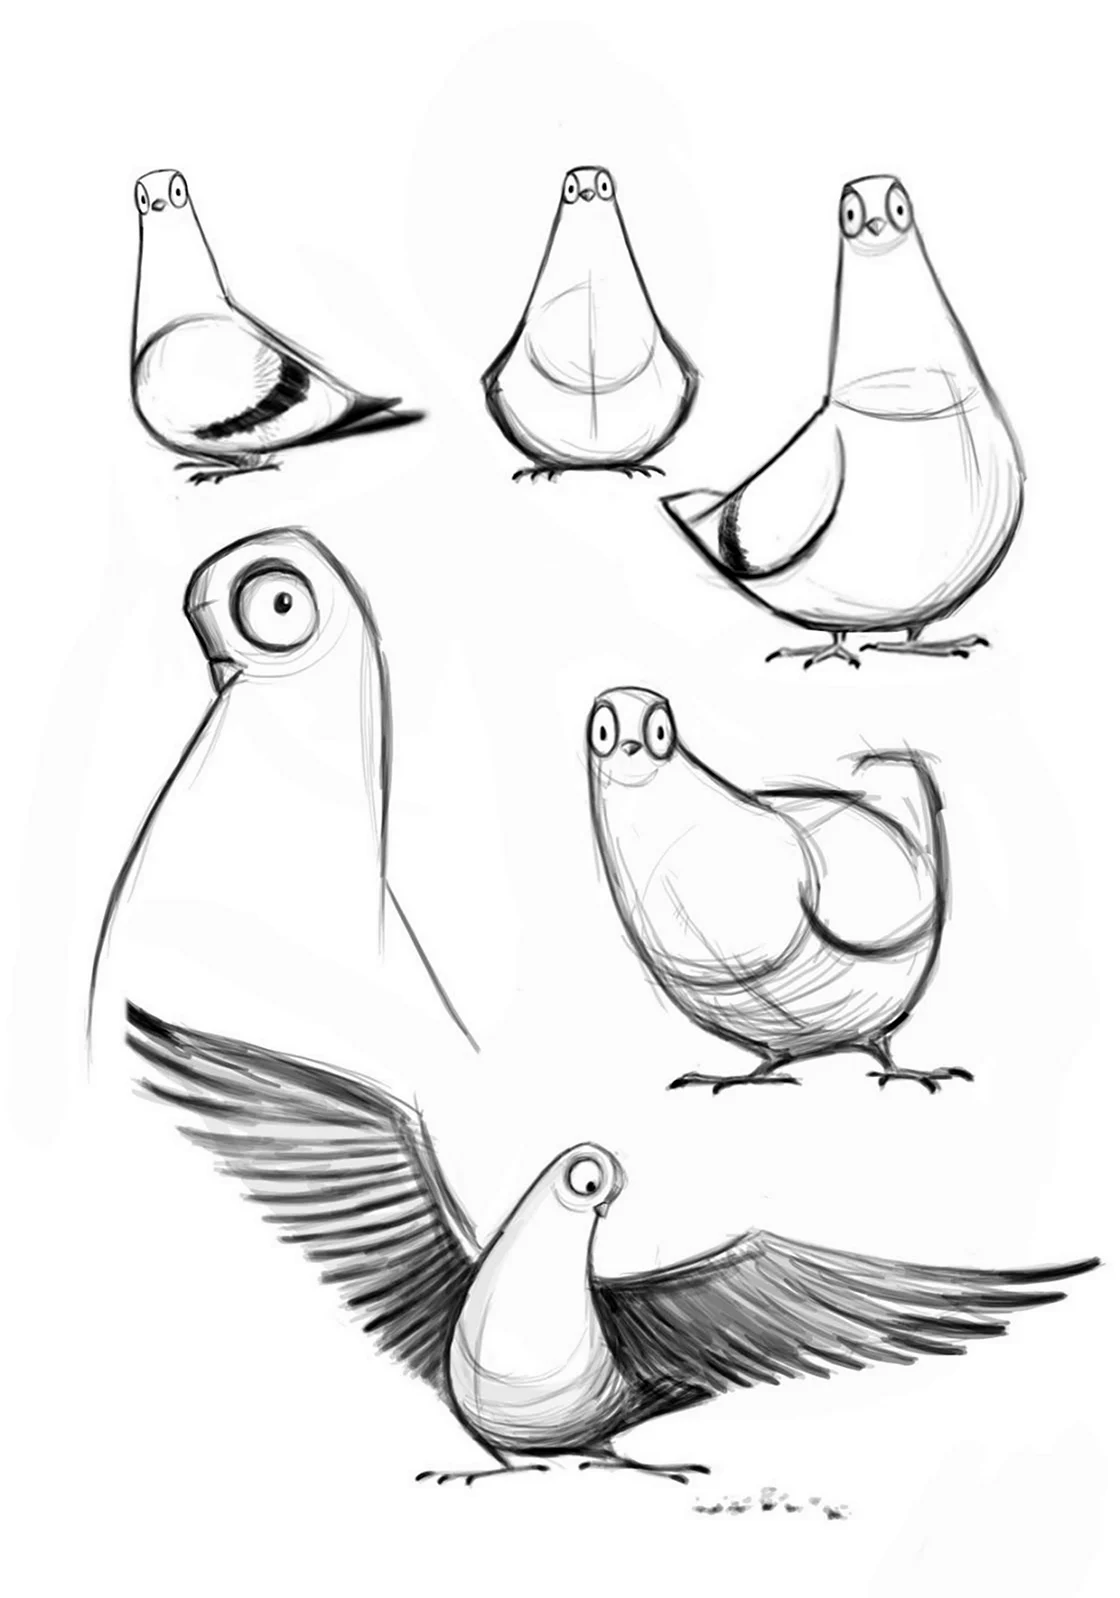 Птицы карандашом для срисовки. Для срисовки